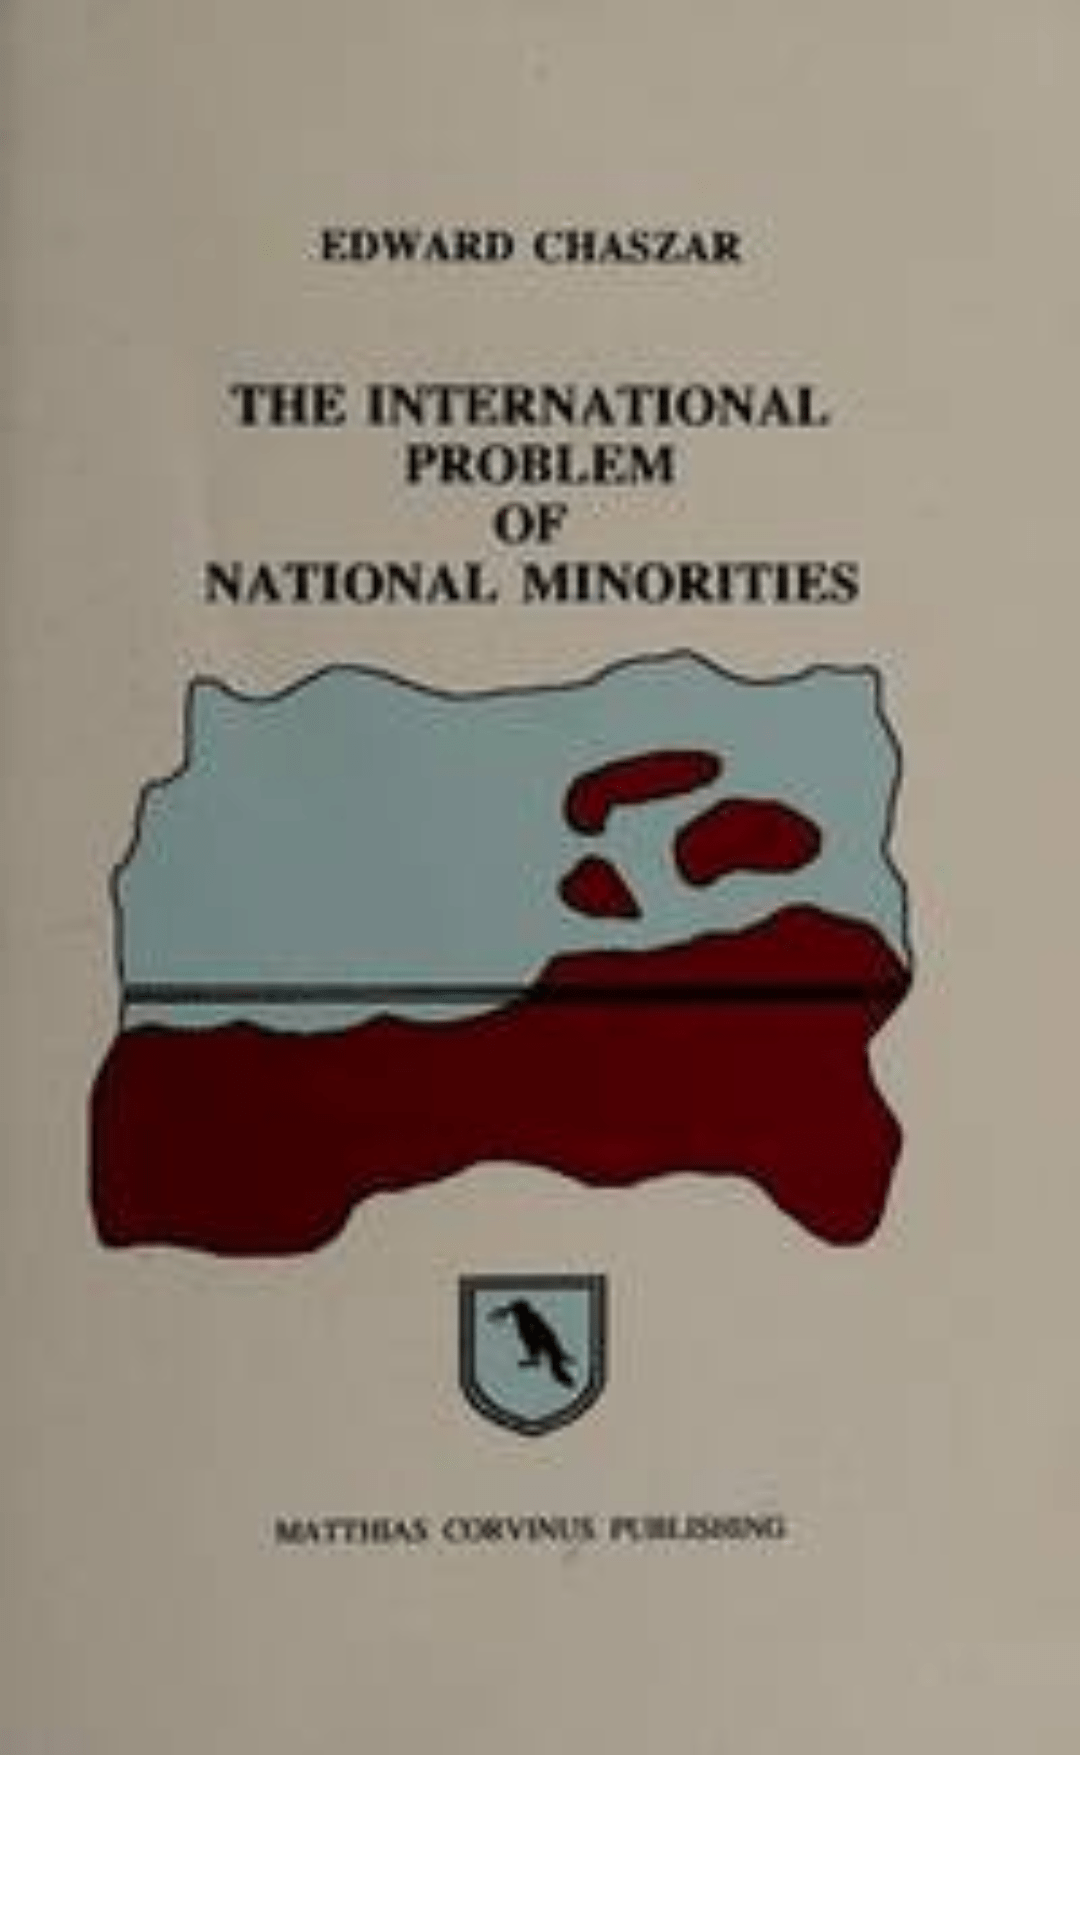 The International Problem of National Minorities